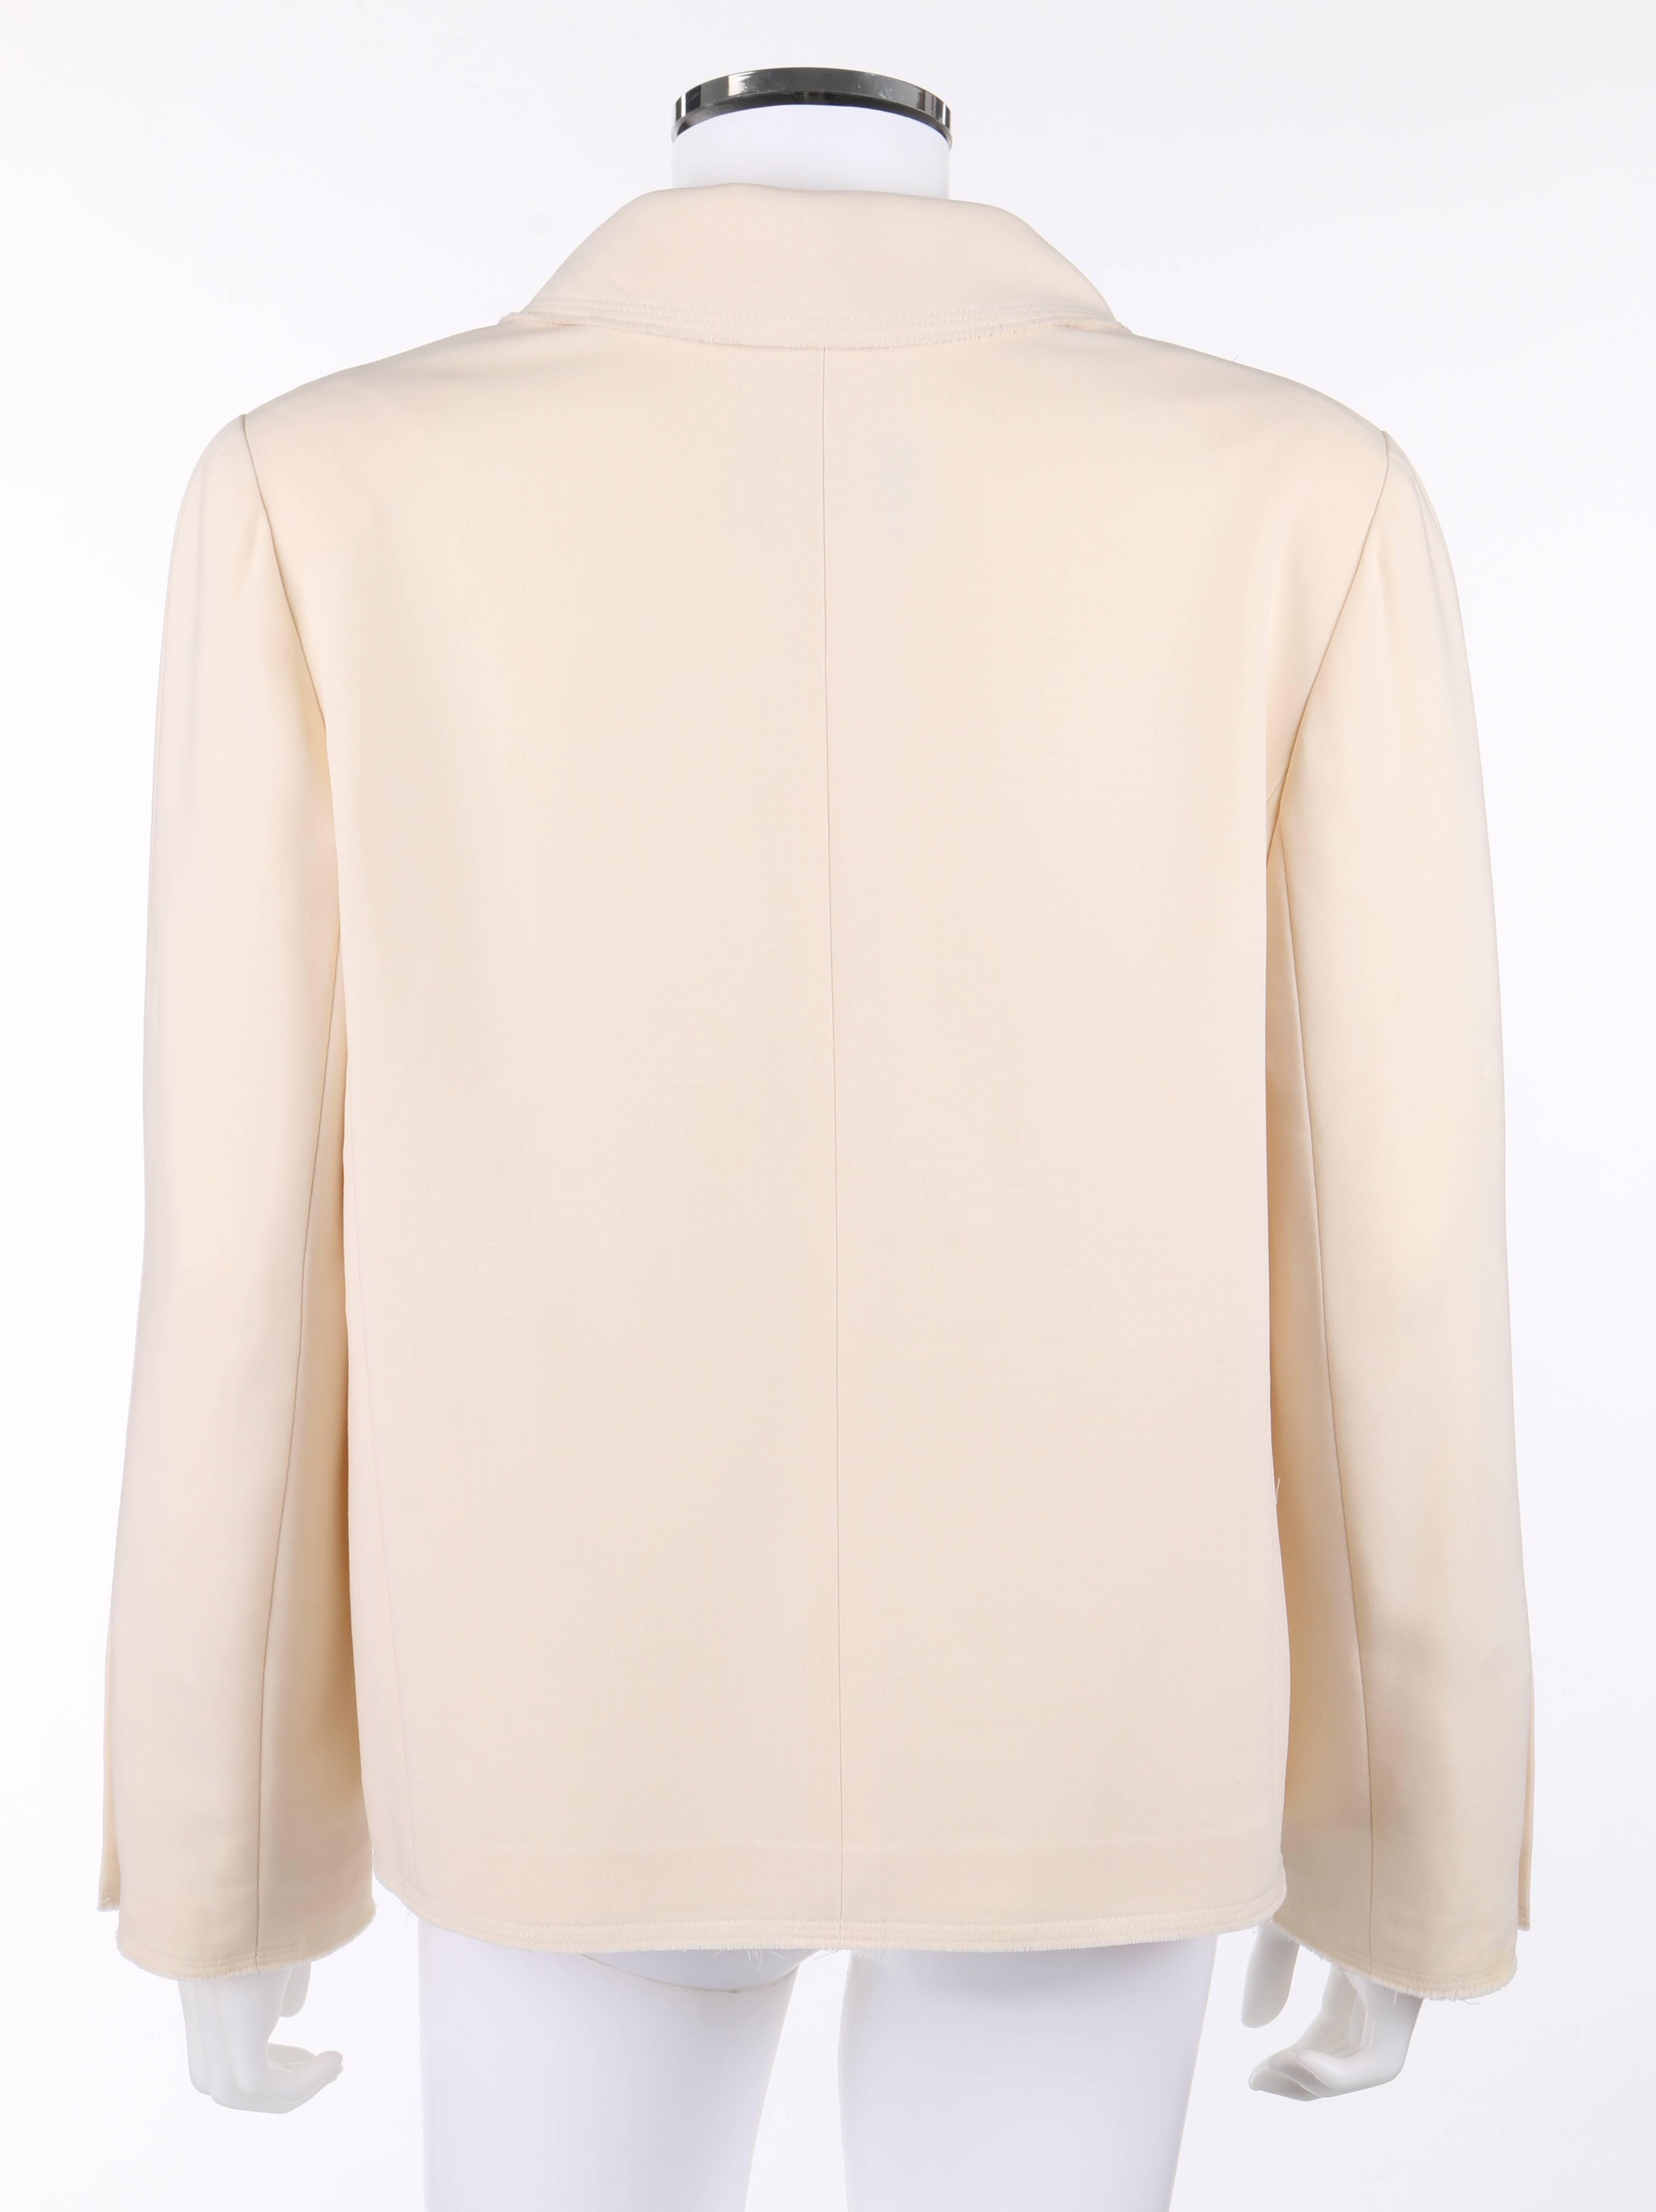 White CHANEL S/S 2007 Creme Wool Blend Raw Edge Detail Four Pocket Blazer Jacket